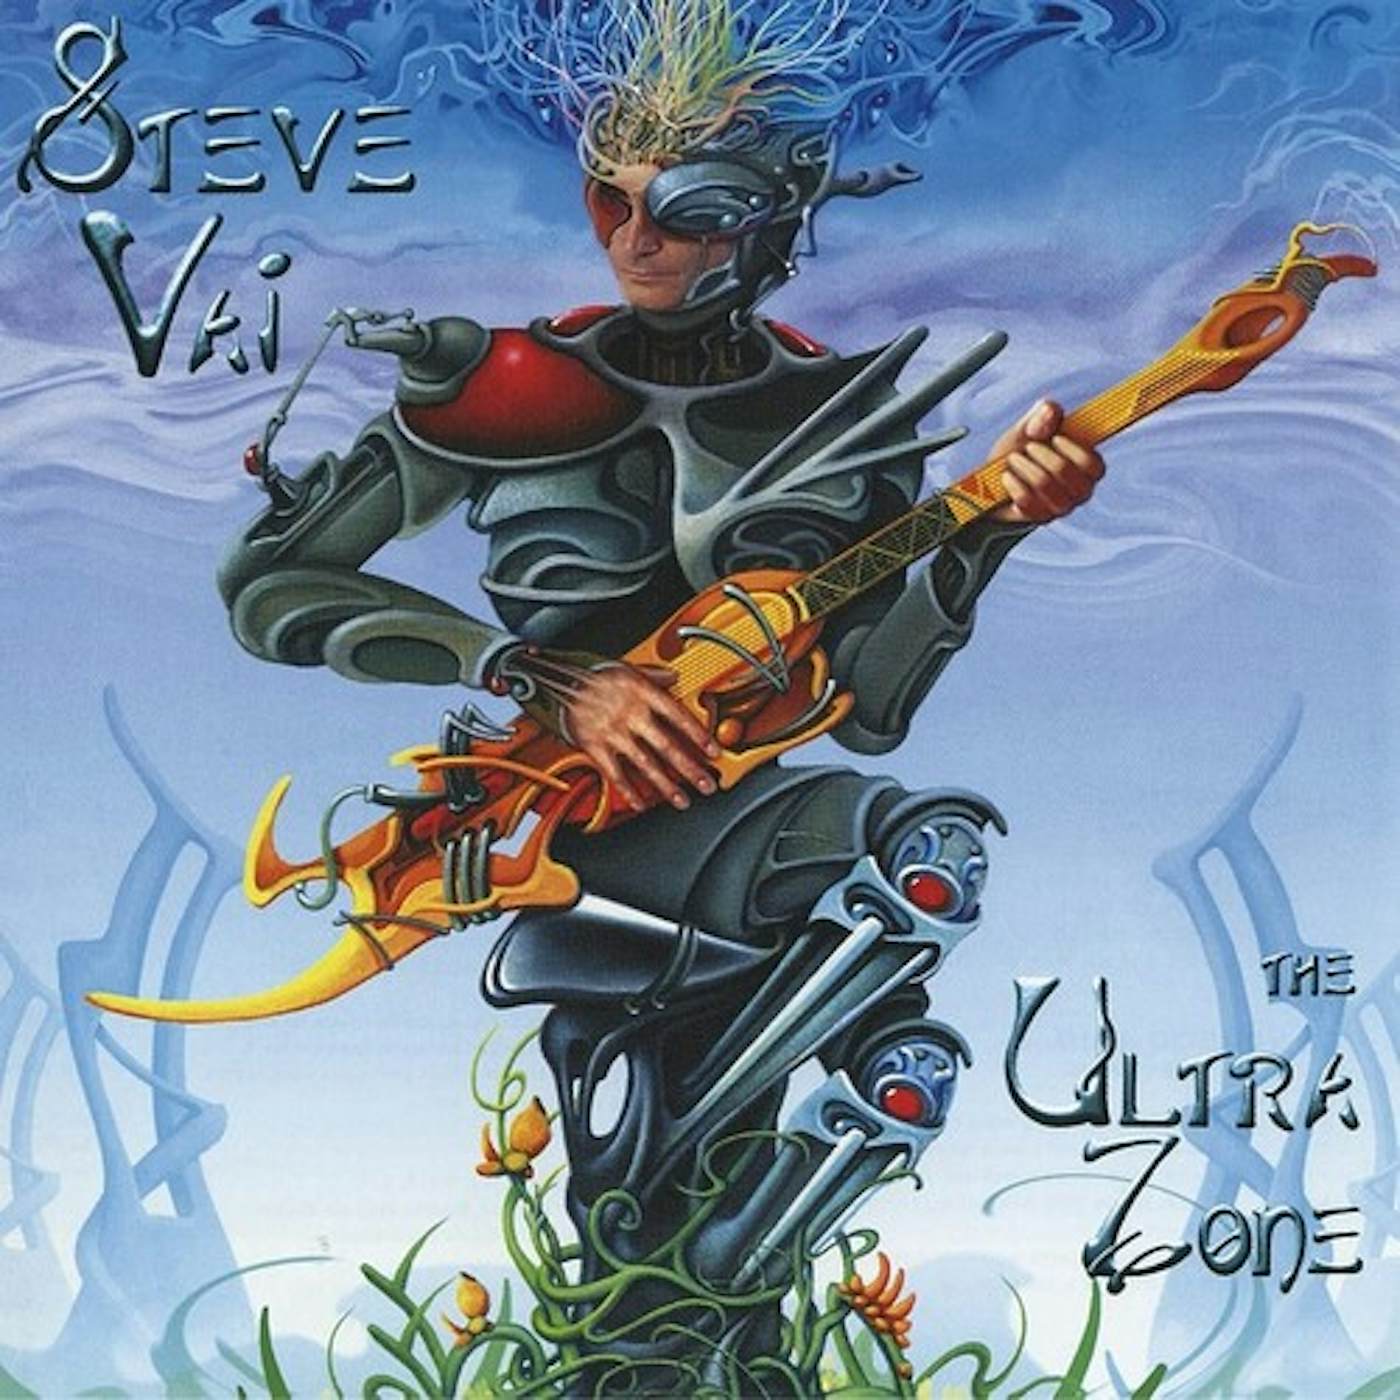 Steve Vai ULTRA ZONE (IMPORT) CD